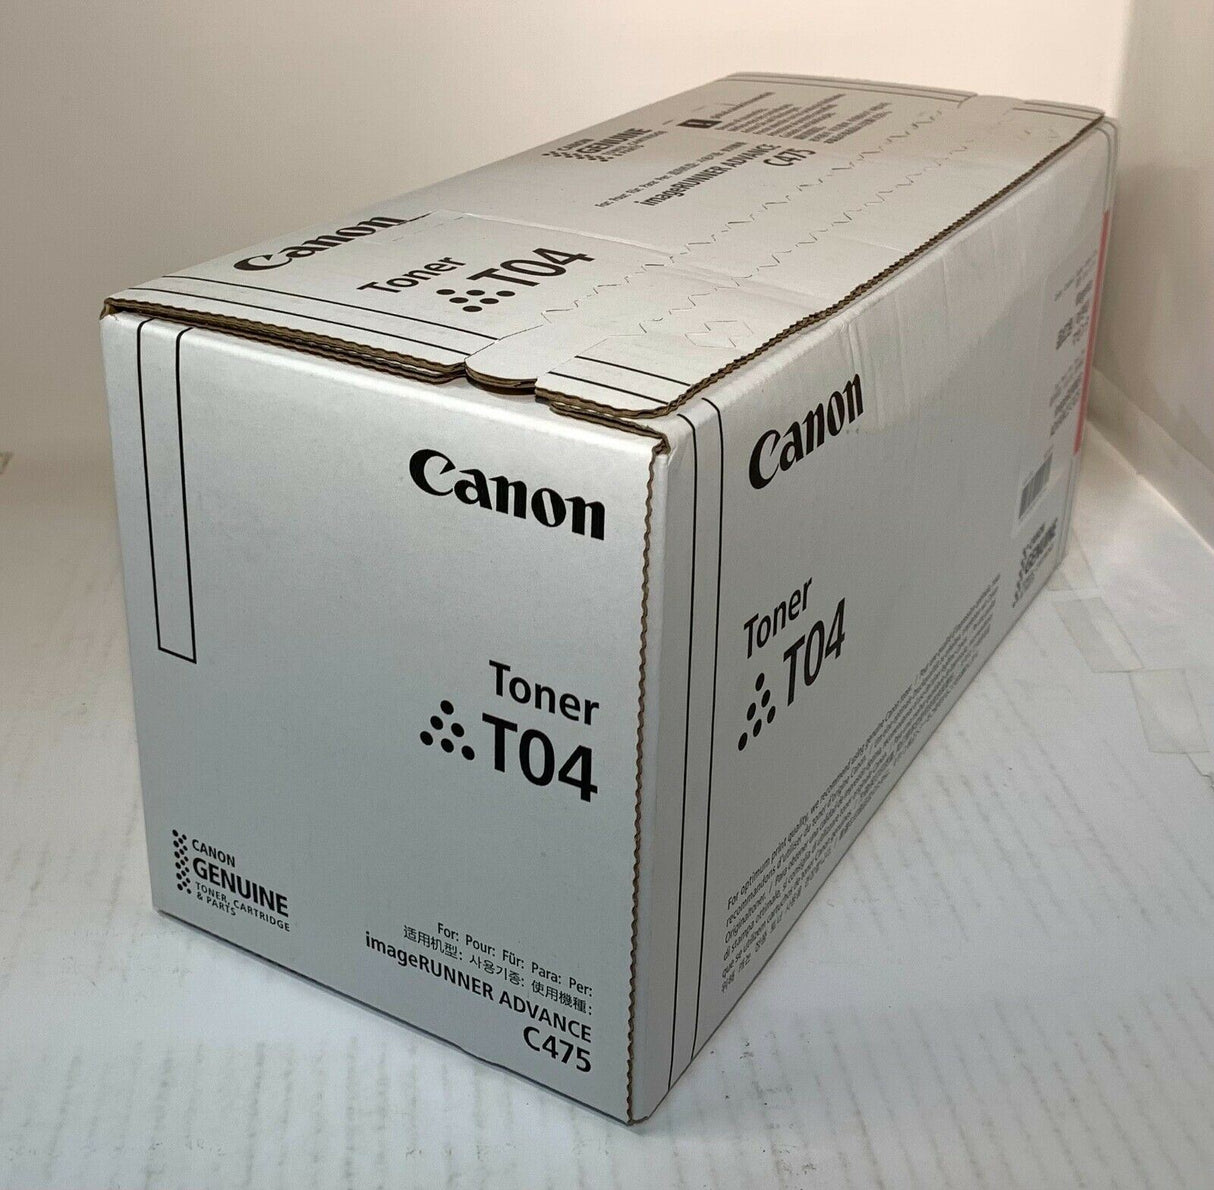 "Original Canon 2978C001 T04 Magenta Toner for imageRUNNER ADVANCE C475 NEW